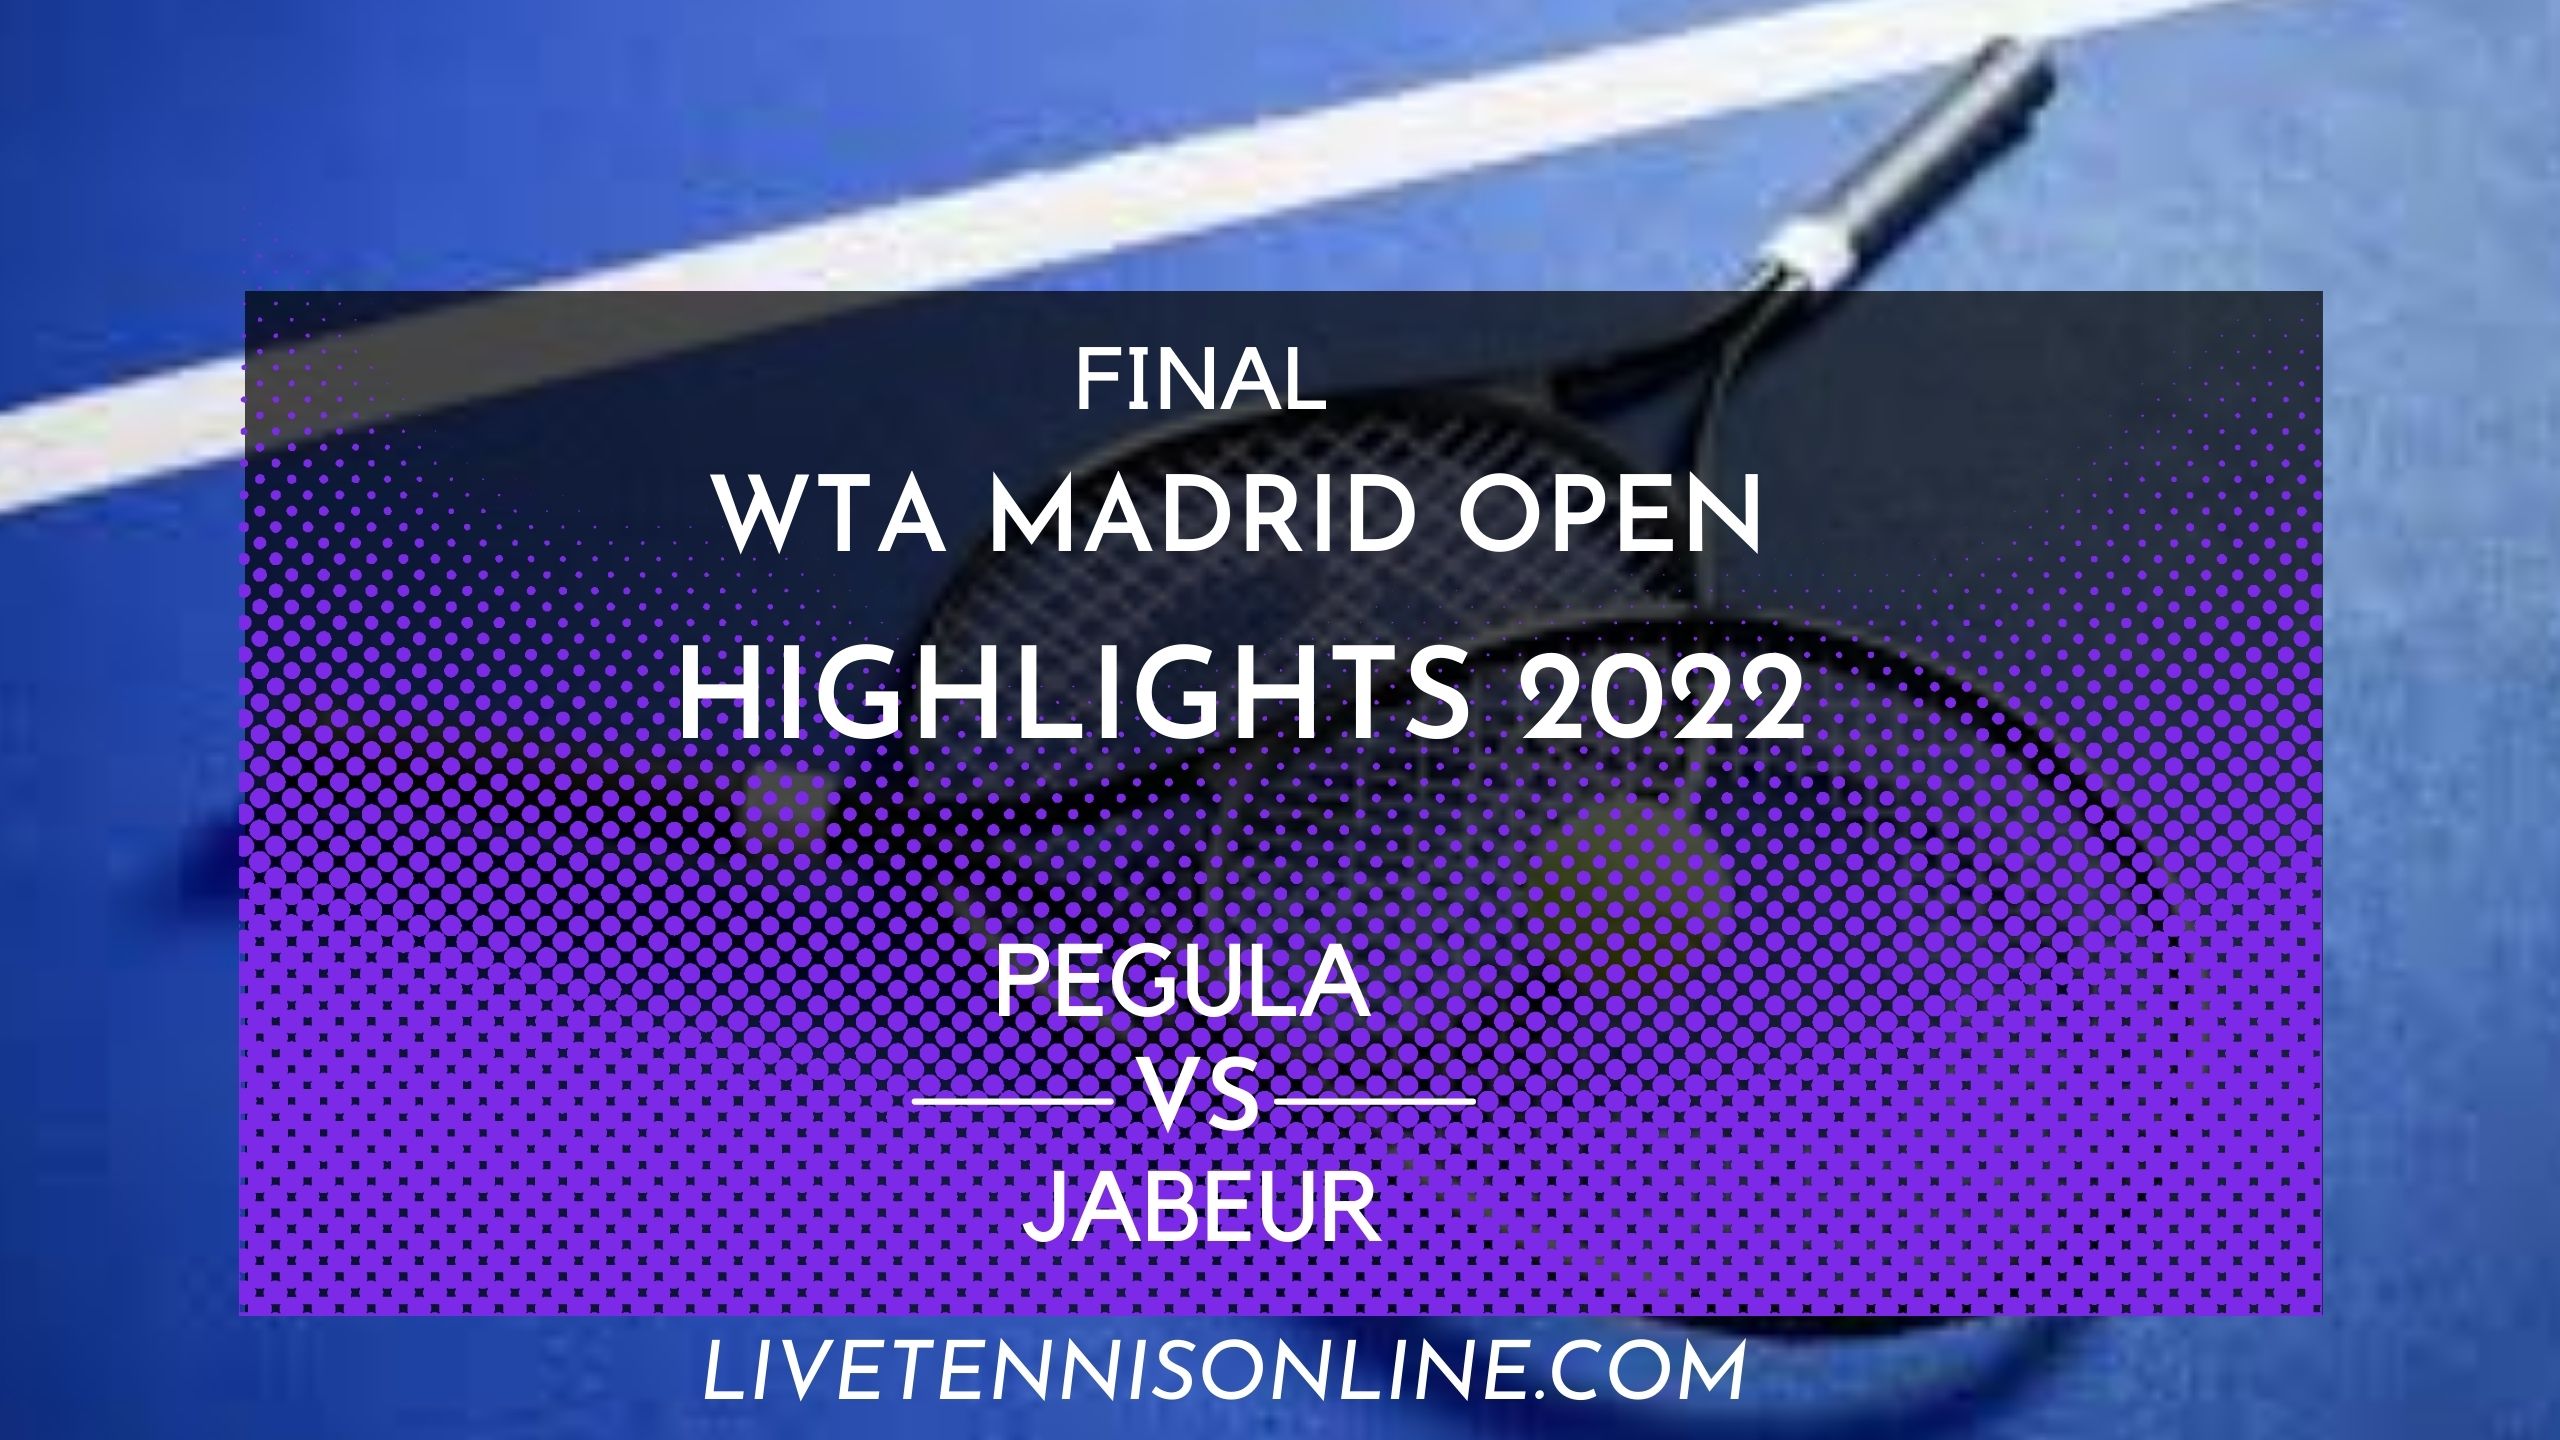 Pegula Vs Jabeur Final Highlights 2022 Madrid Open